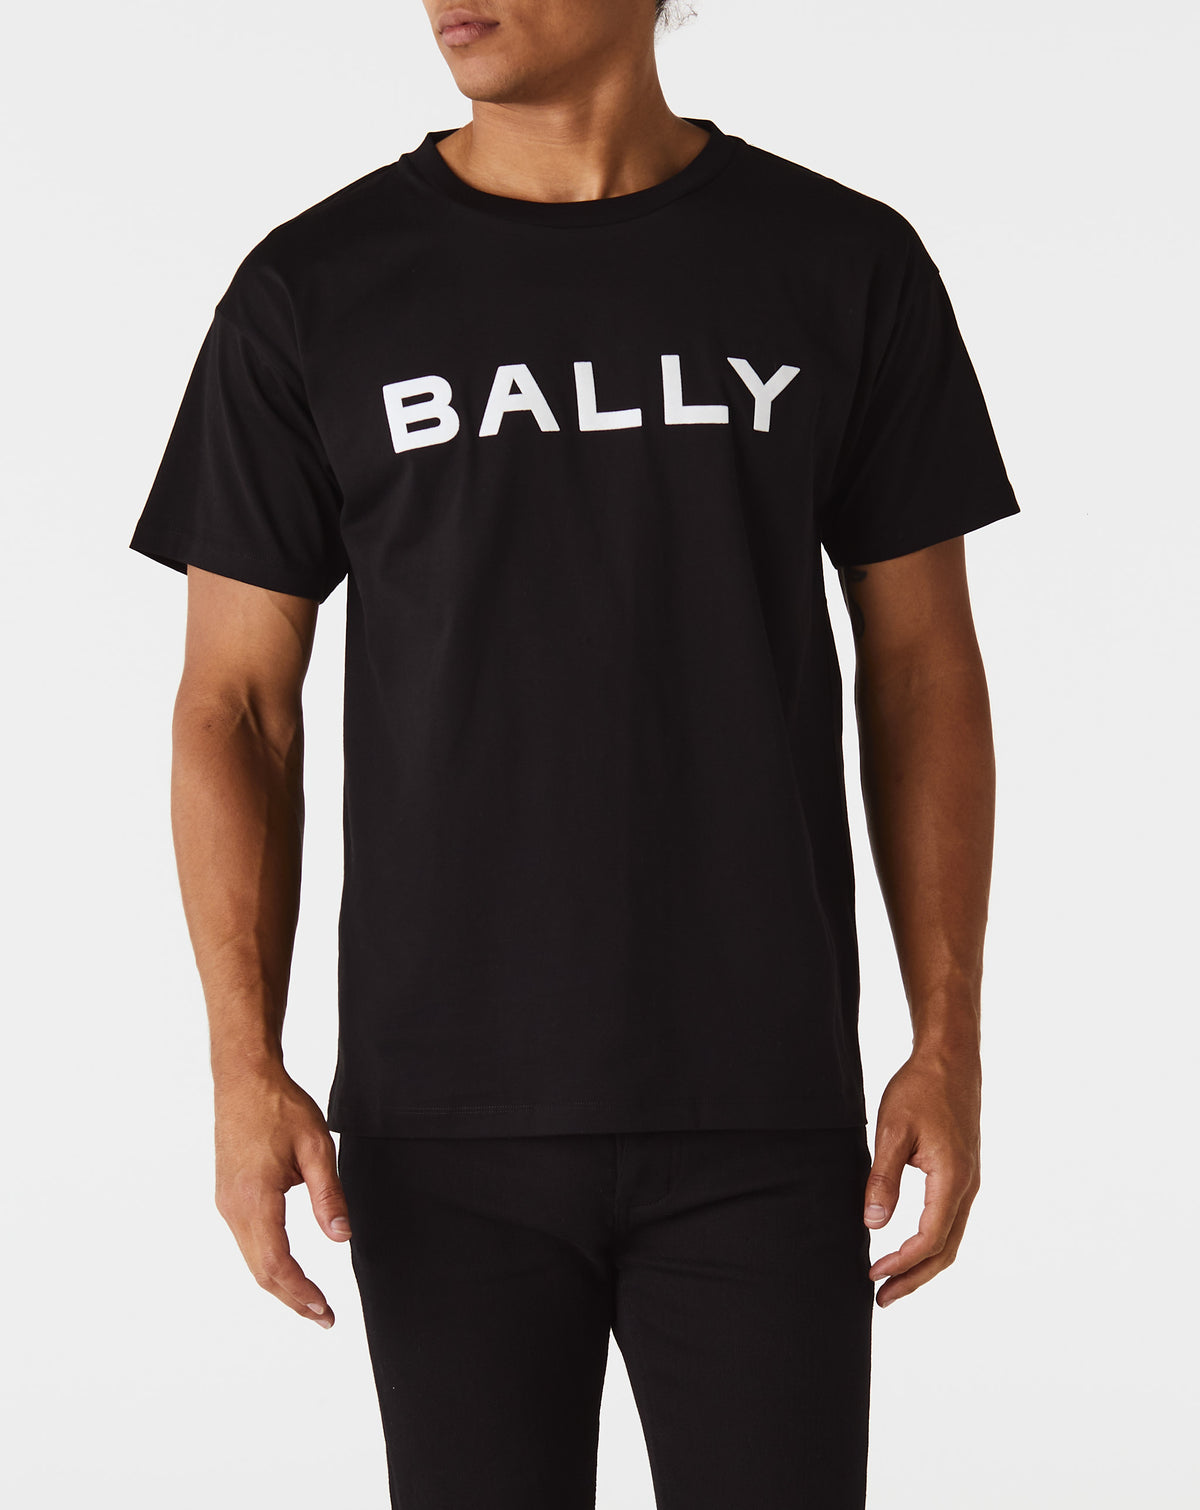 Bally Bally Logo T-Shirt - Rule of Next Apparel